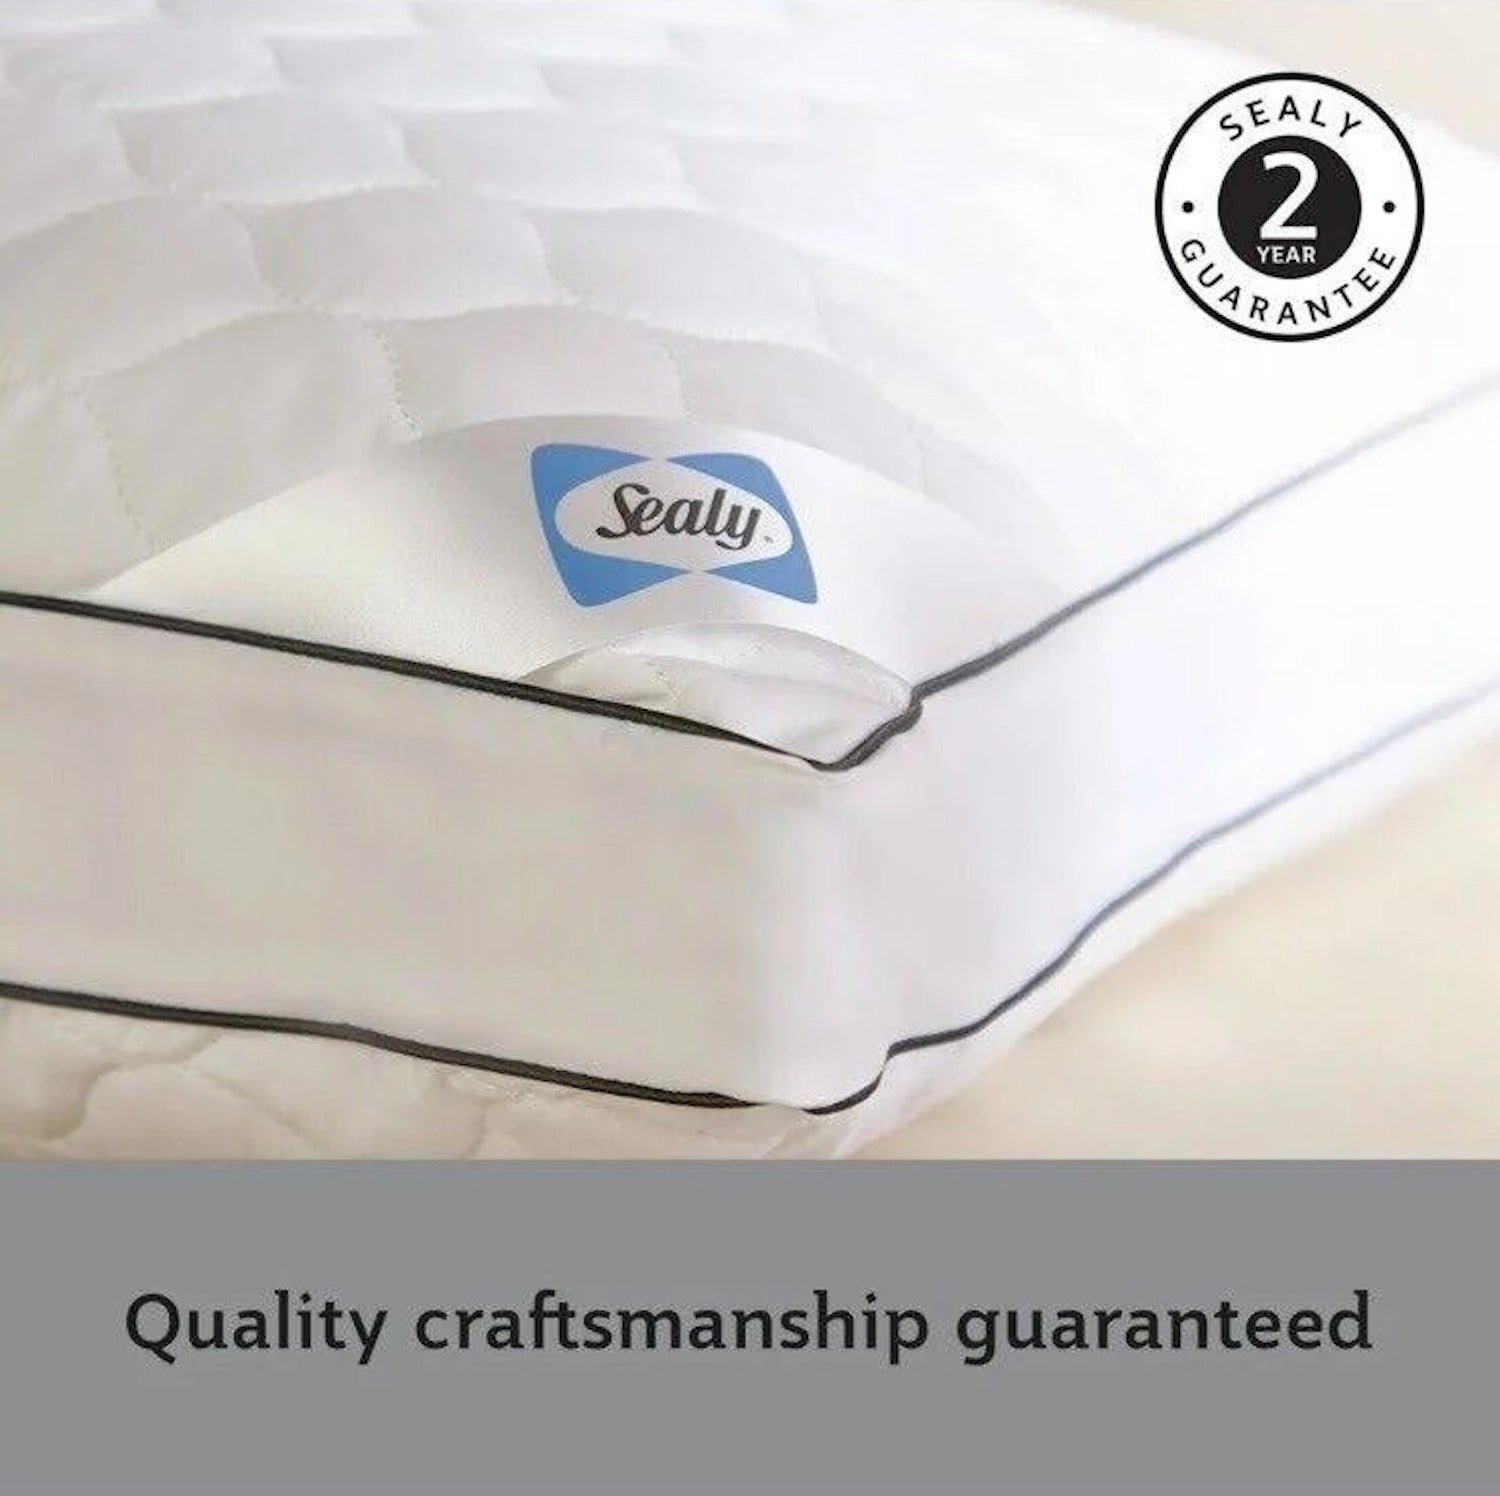 Sealy Side Sleeper Pillow